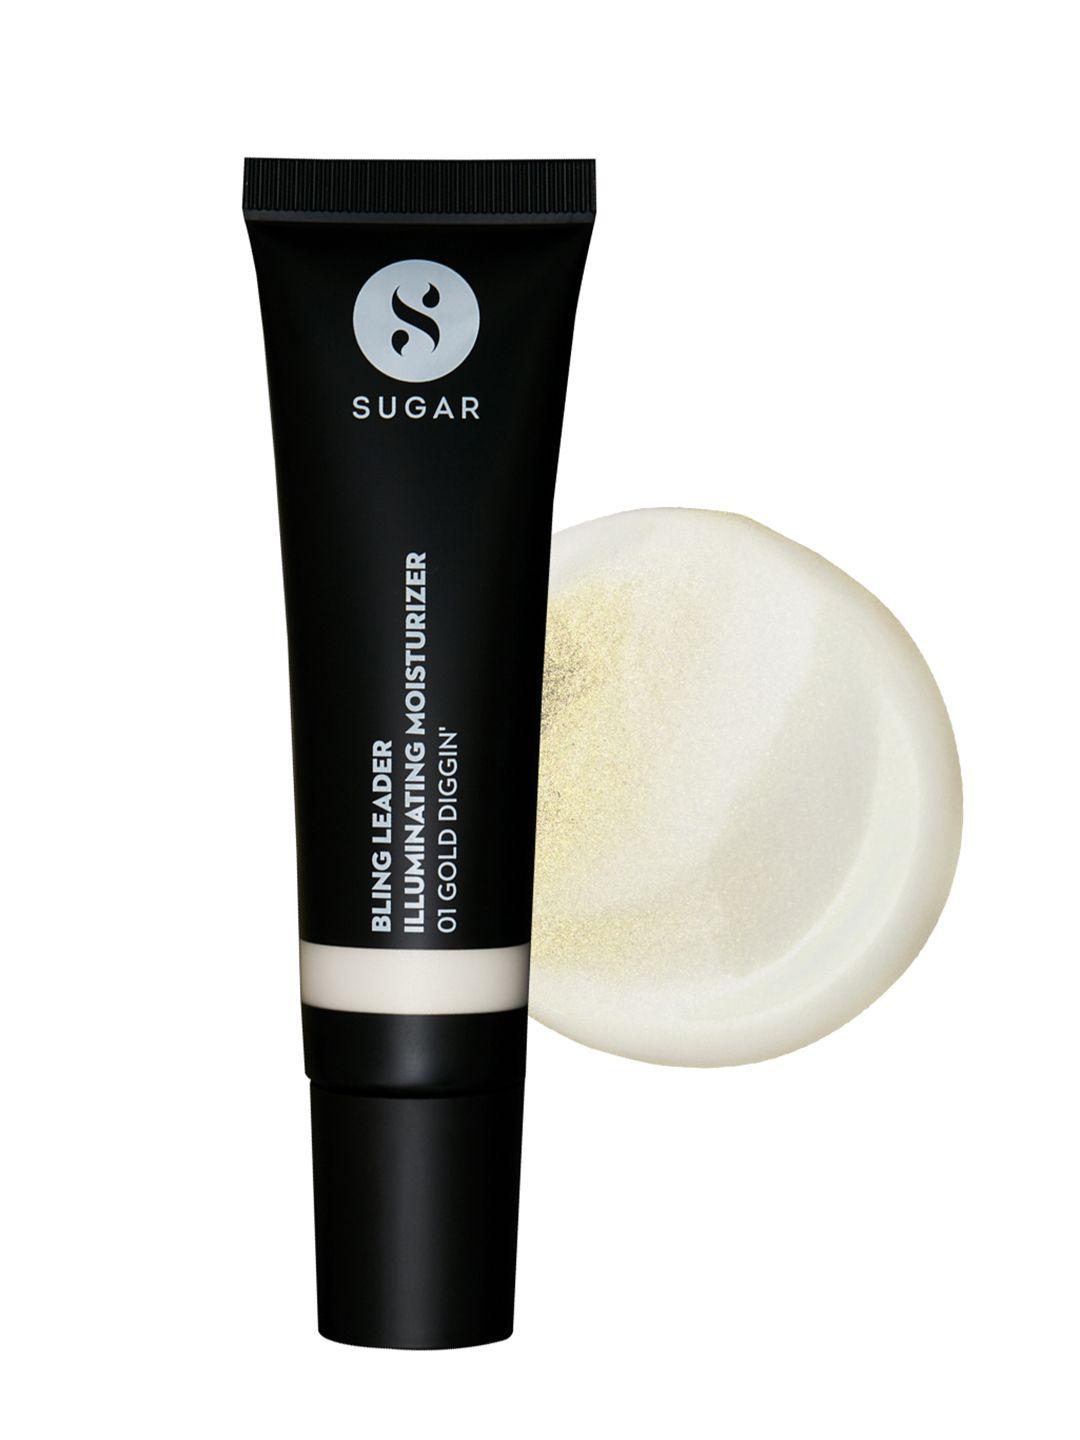 sugar bling leader illuminating moisturizer - 01 gold diggin with a pearl finish 25 ml